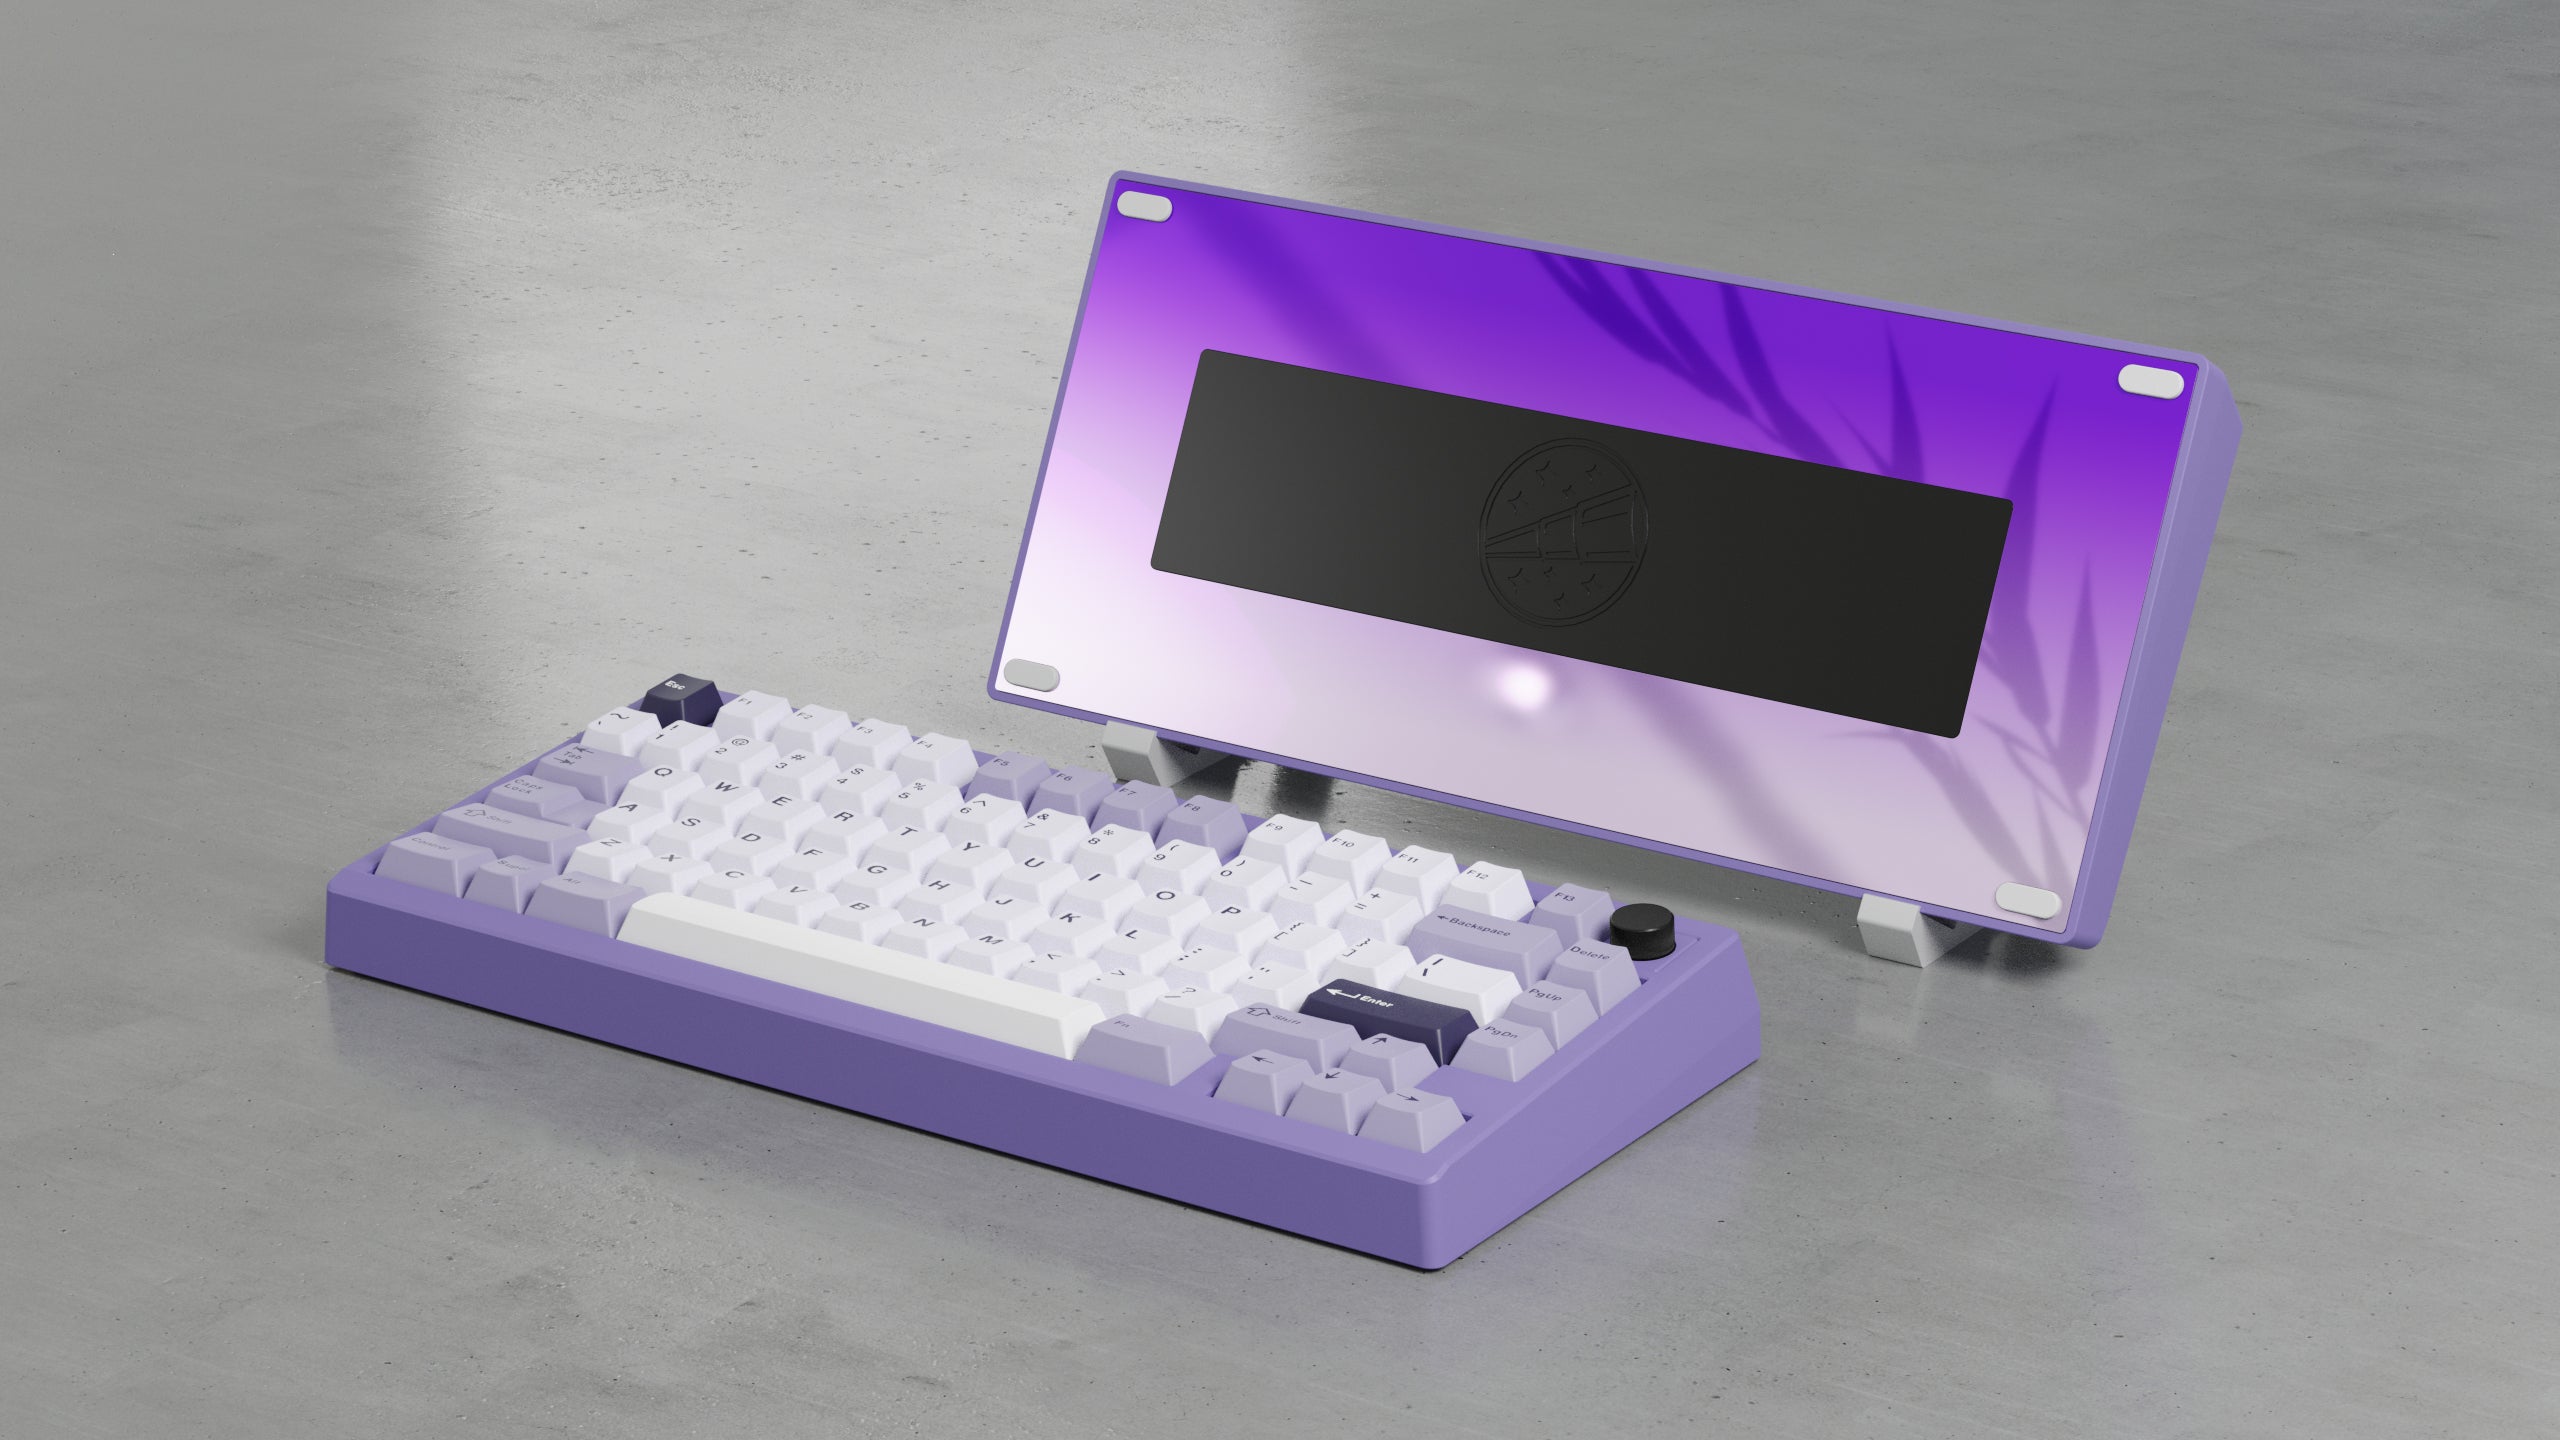 Zoom75 EE Keyboard - Lilac [Preorder]